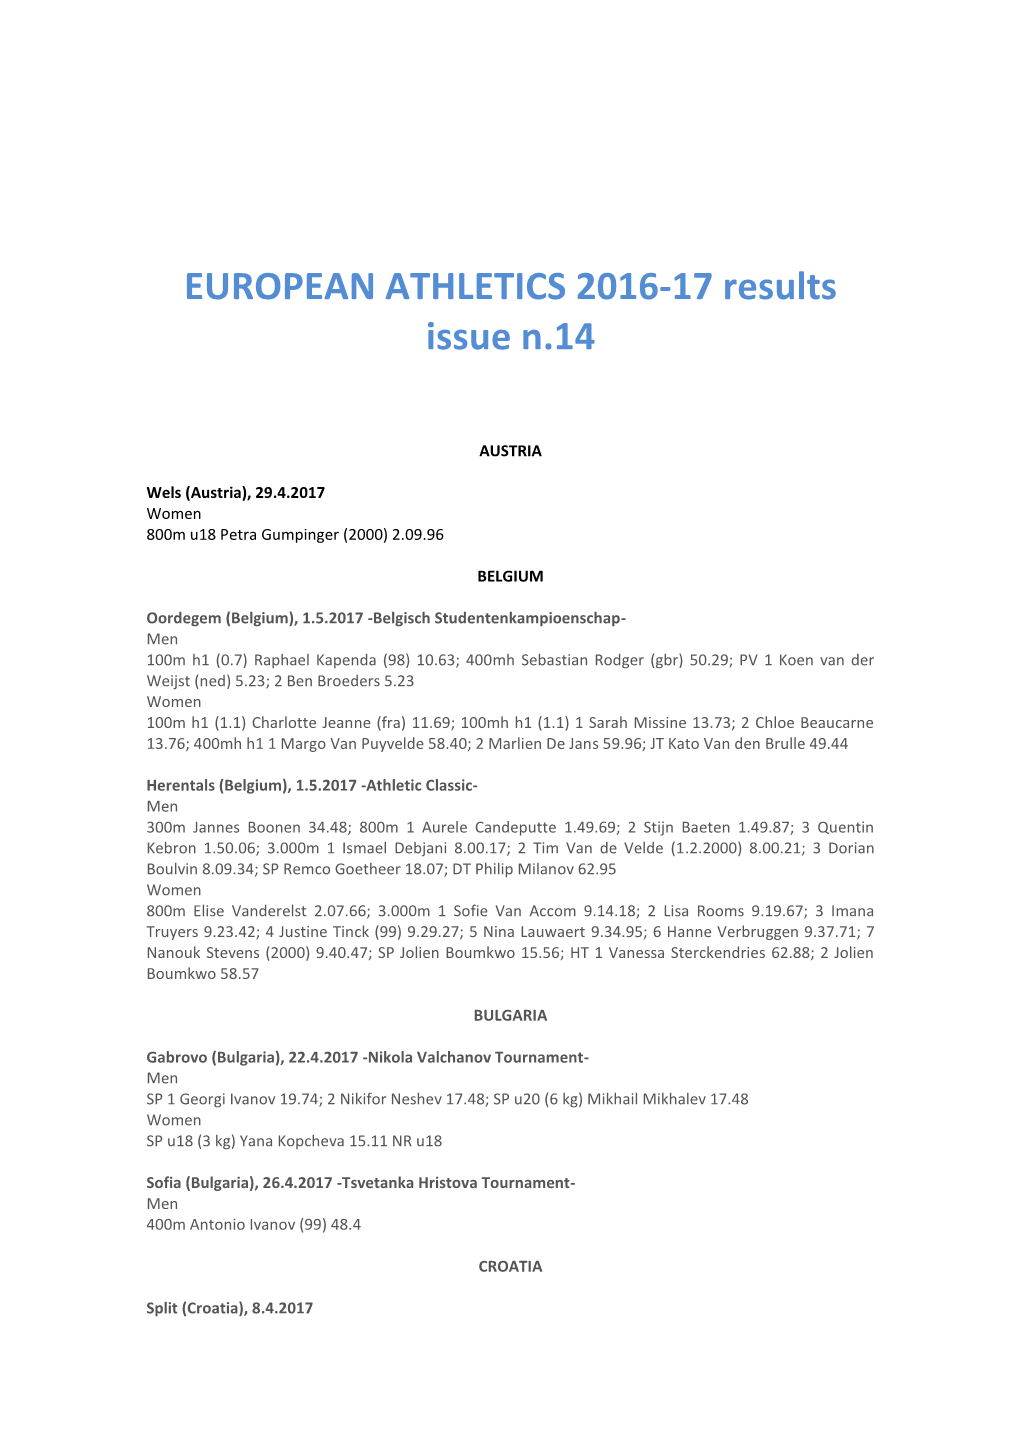 EUROPEAN ATHLETICS 2016-17 Results Issue N.14